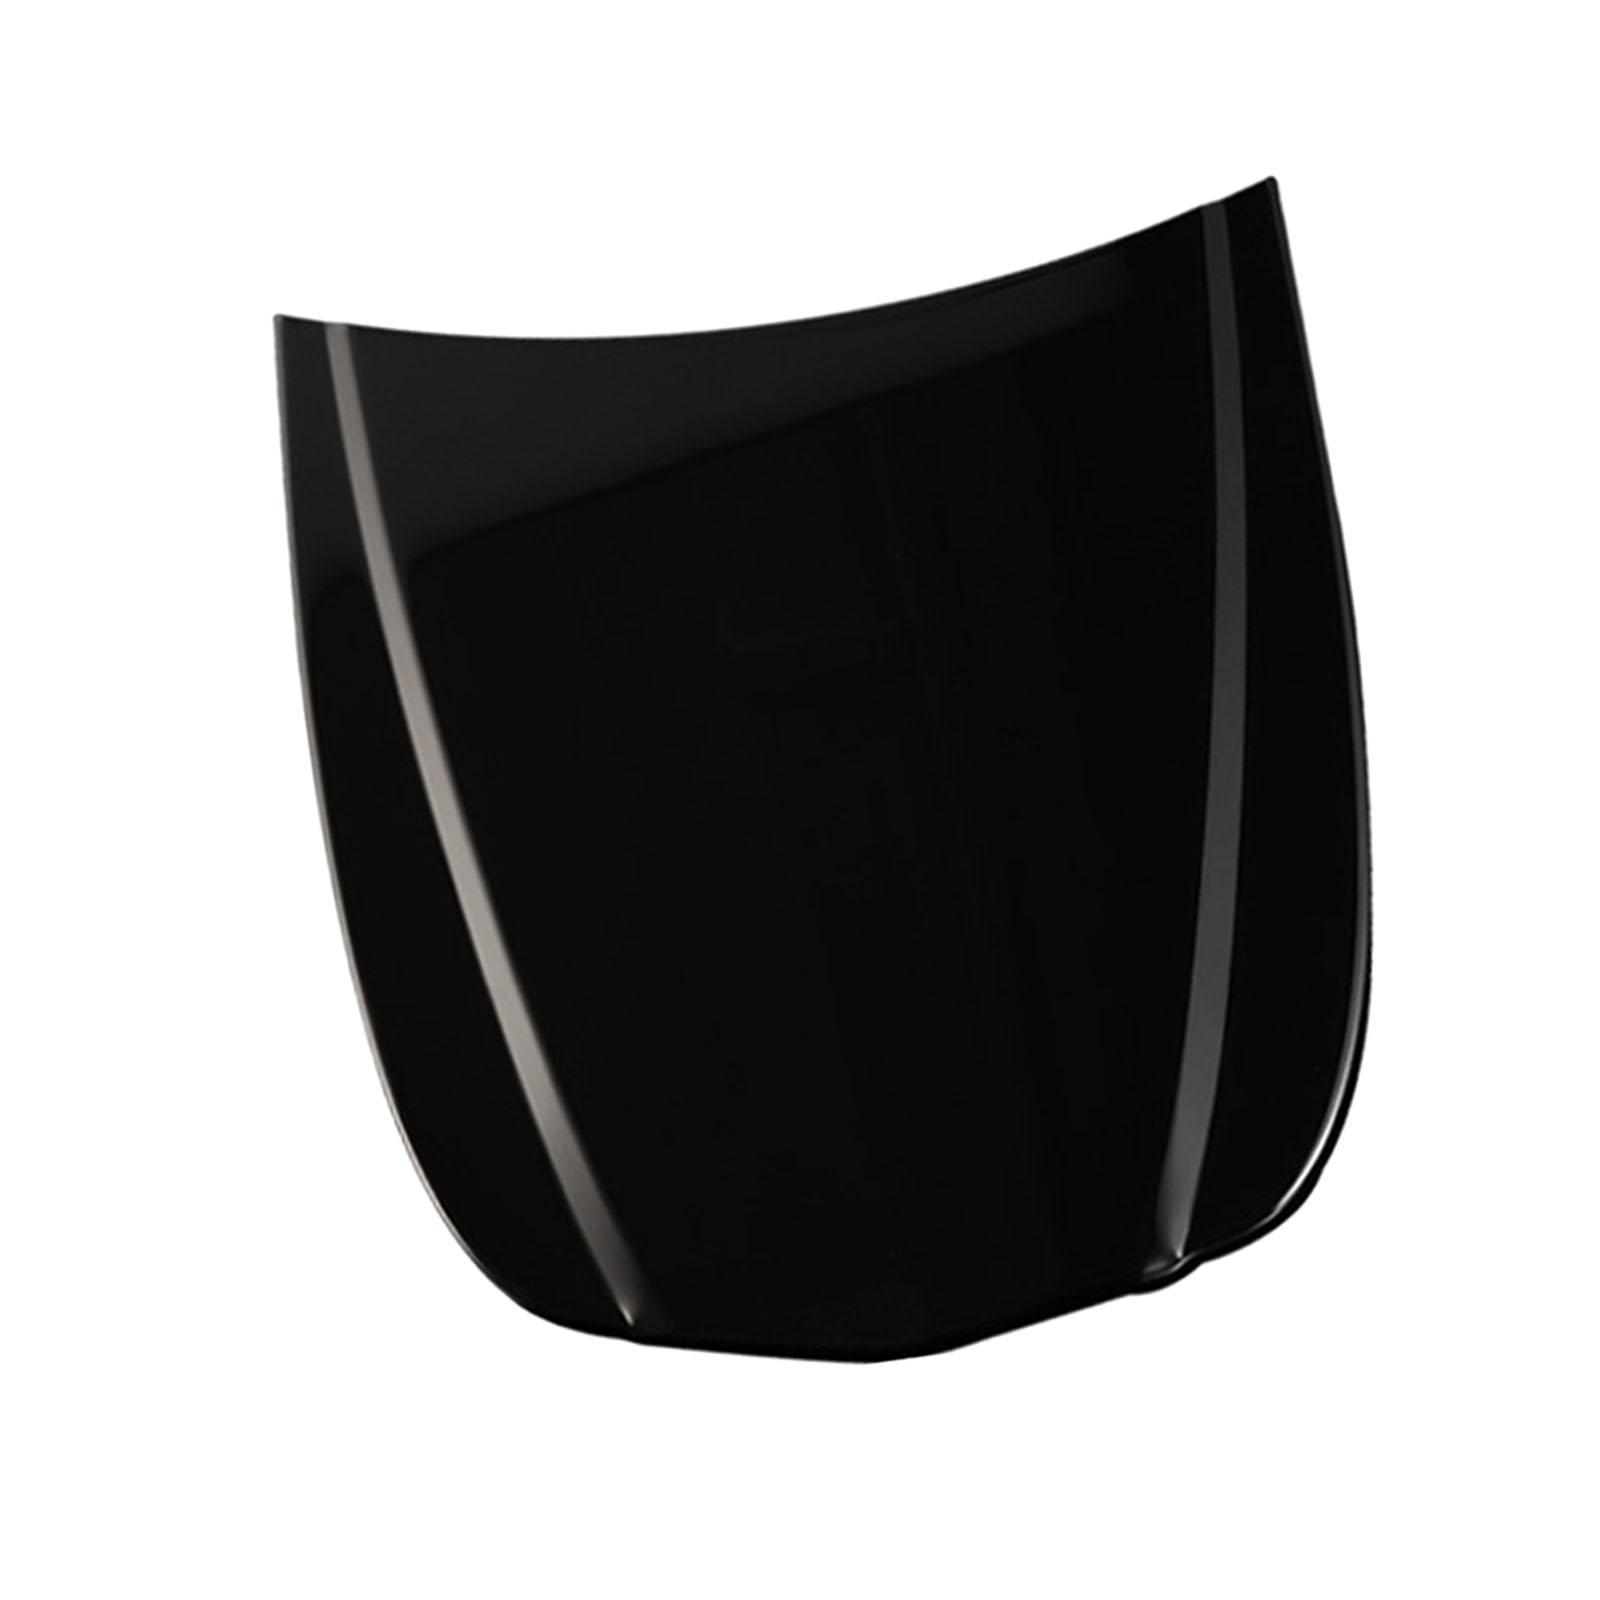 Hình ảnh Car Display Show Model for Windows Tint Painting Wrapping Sturdy Black